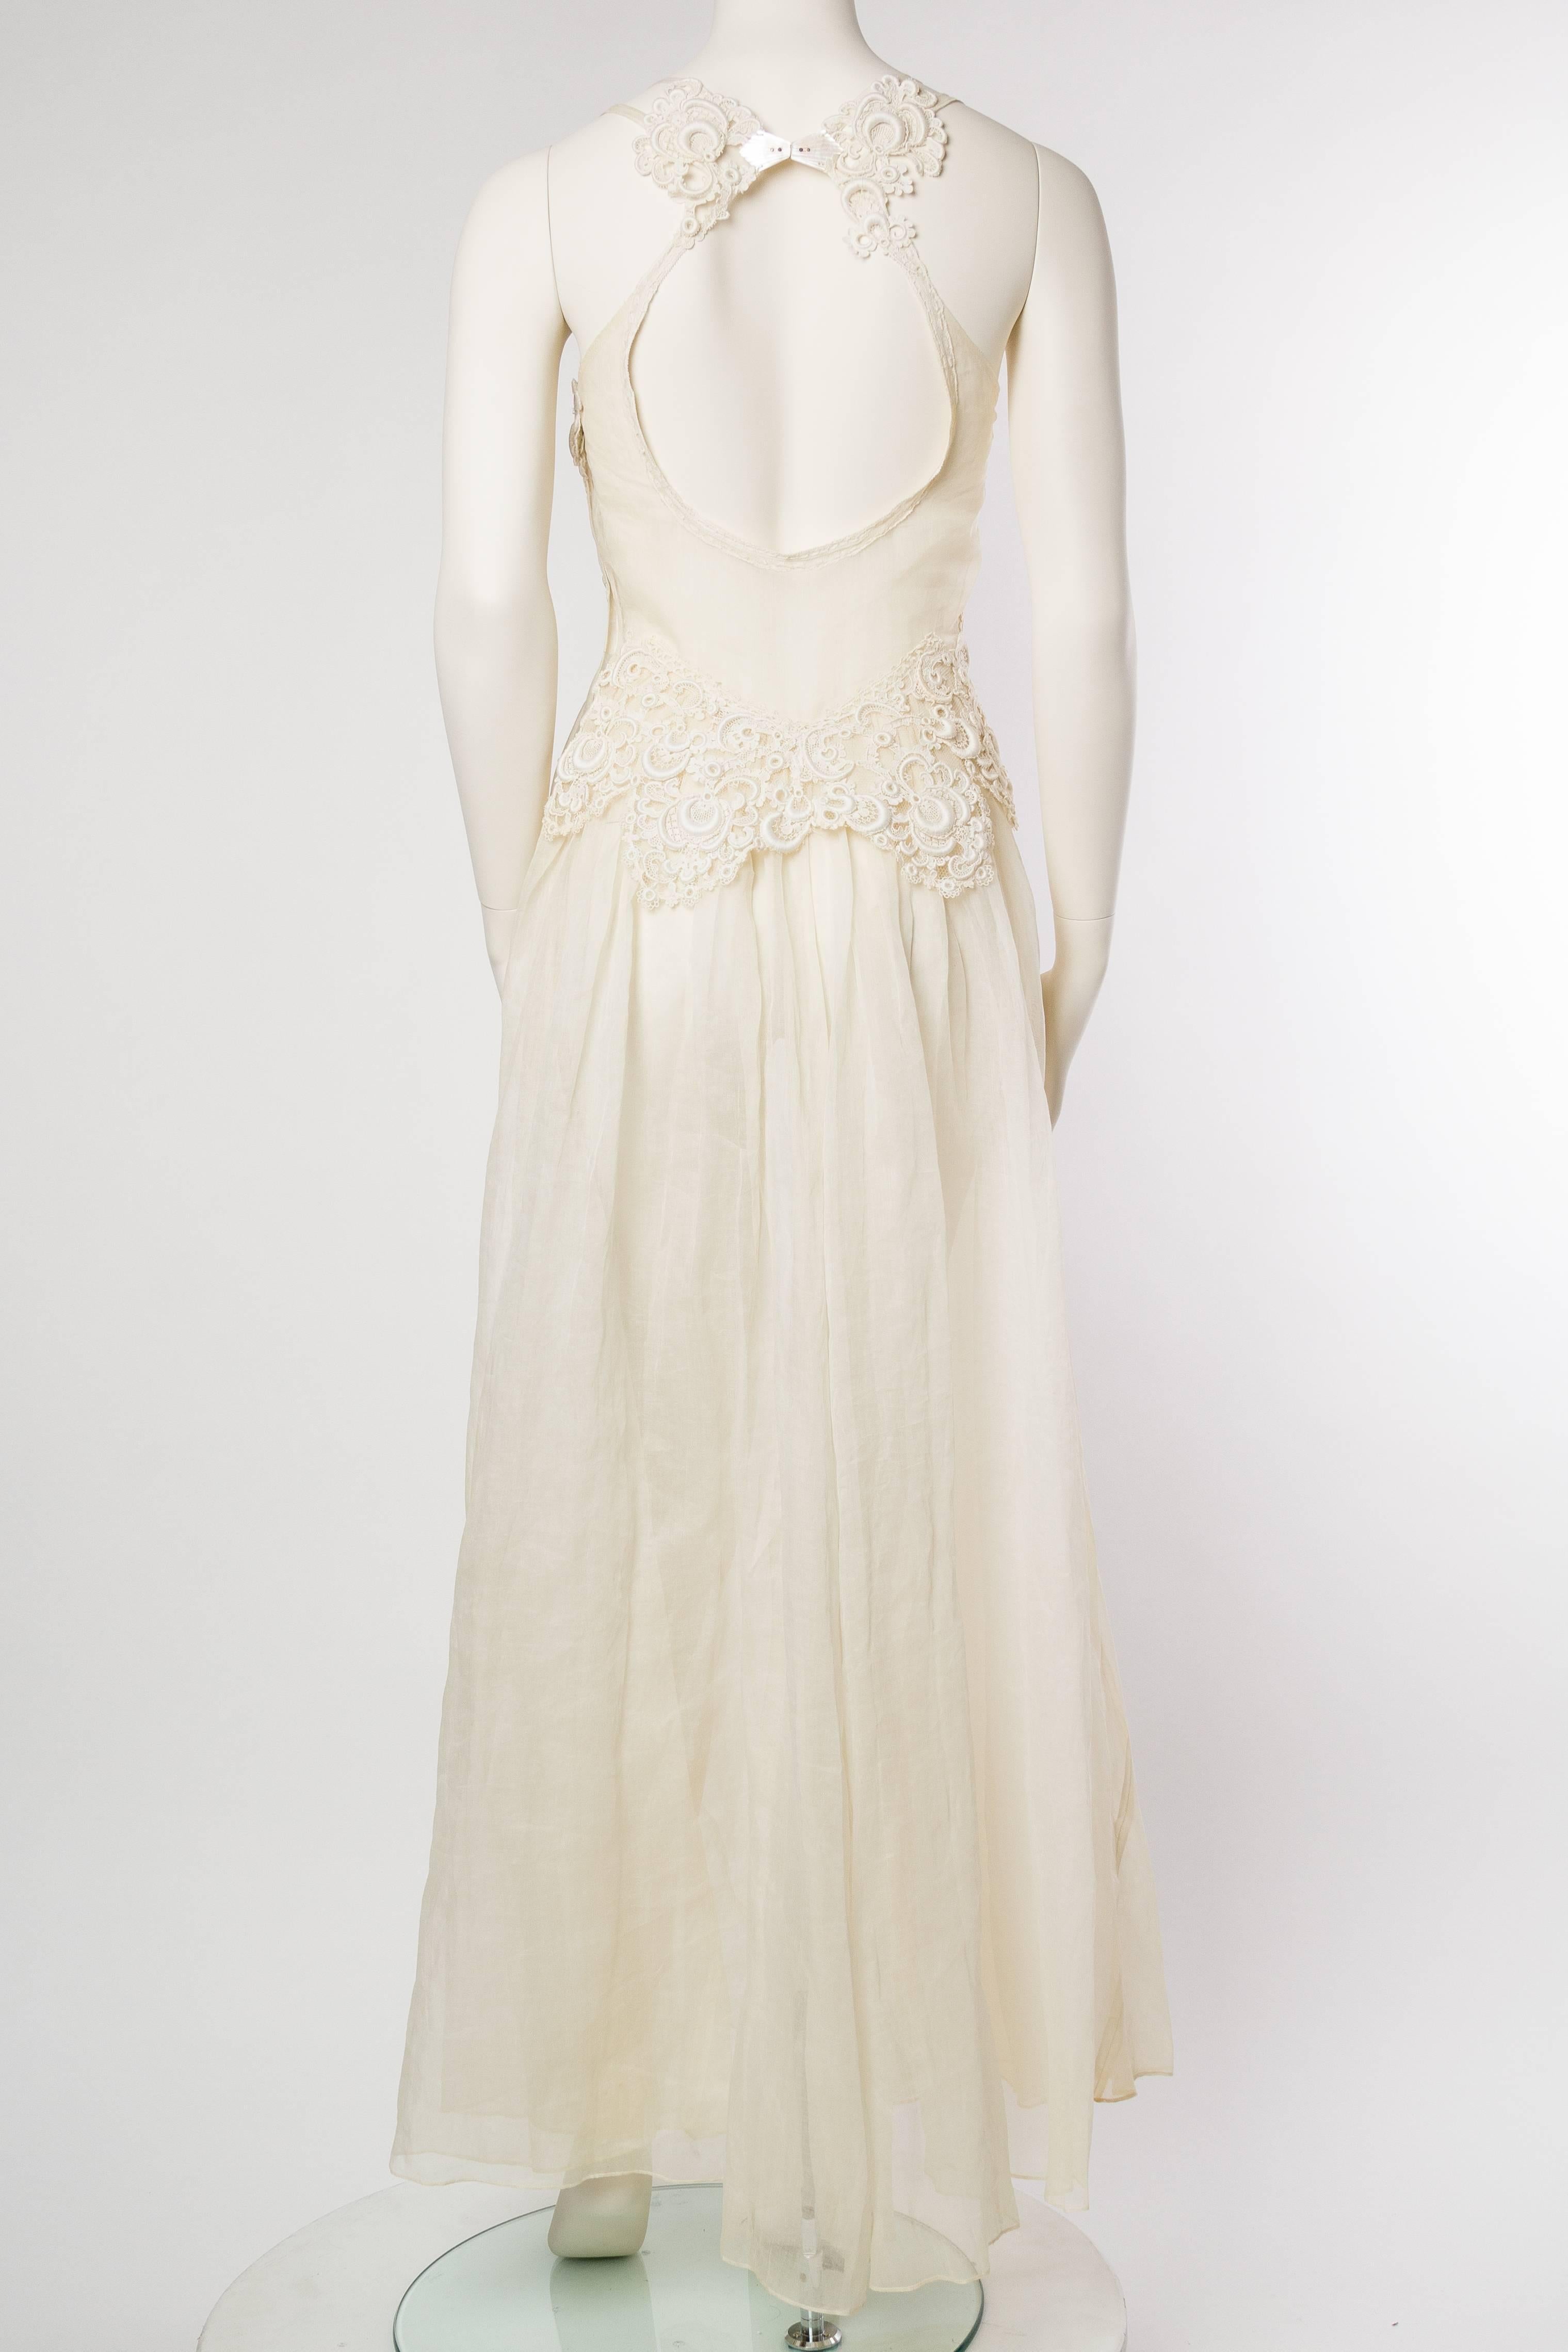 Women's or Men's Alexander McQueen Inspired re-worked 1930s Lace Dress